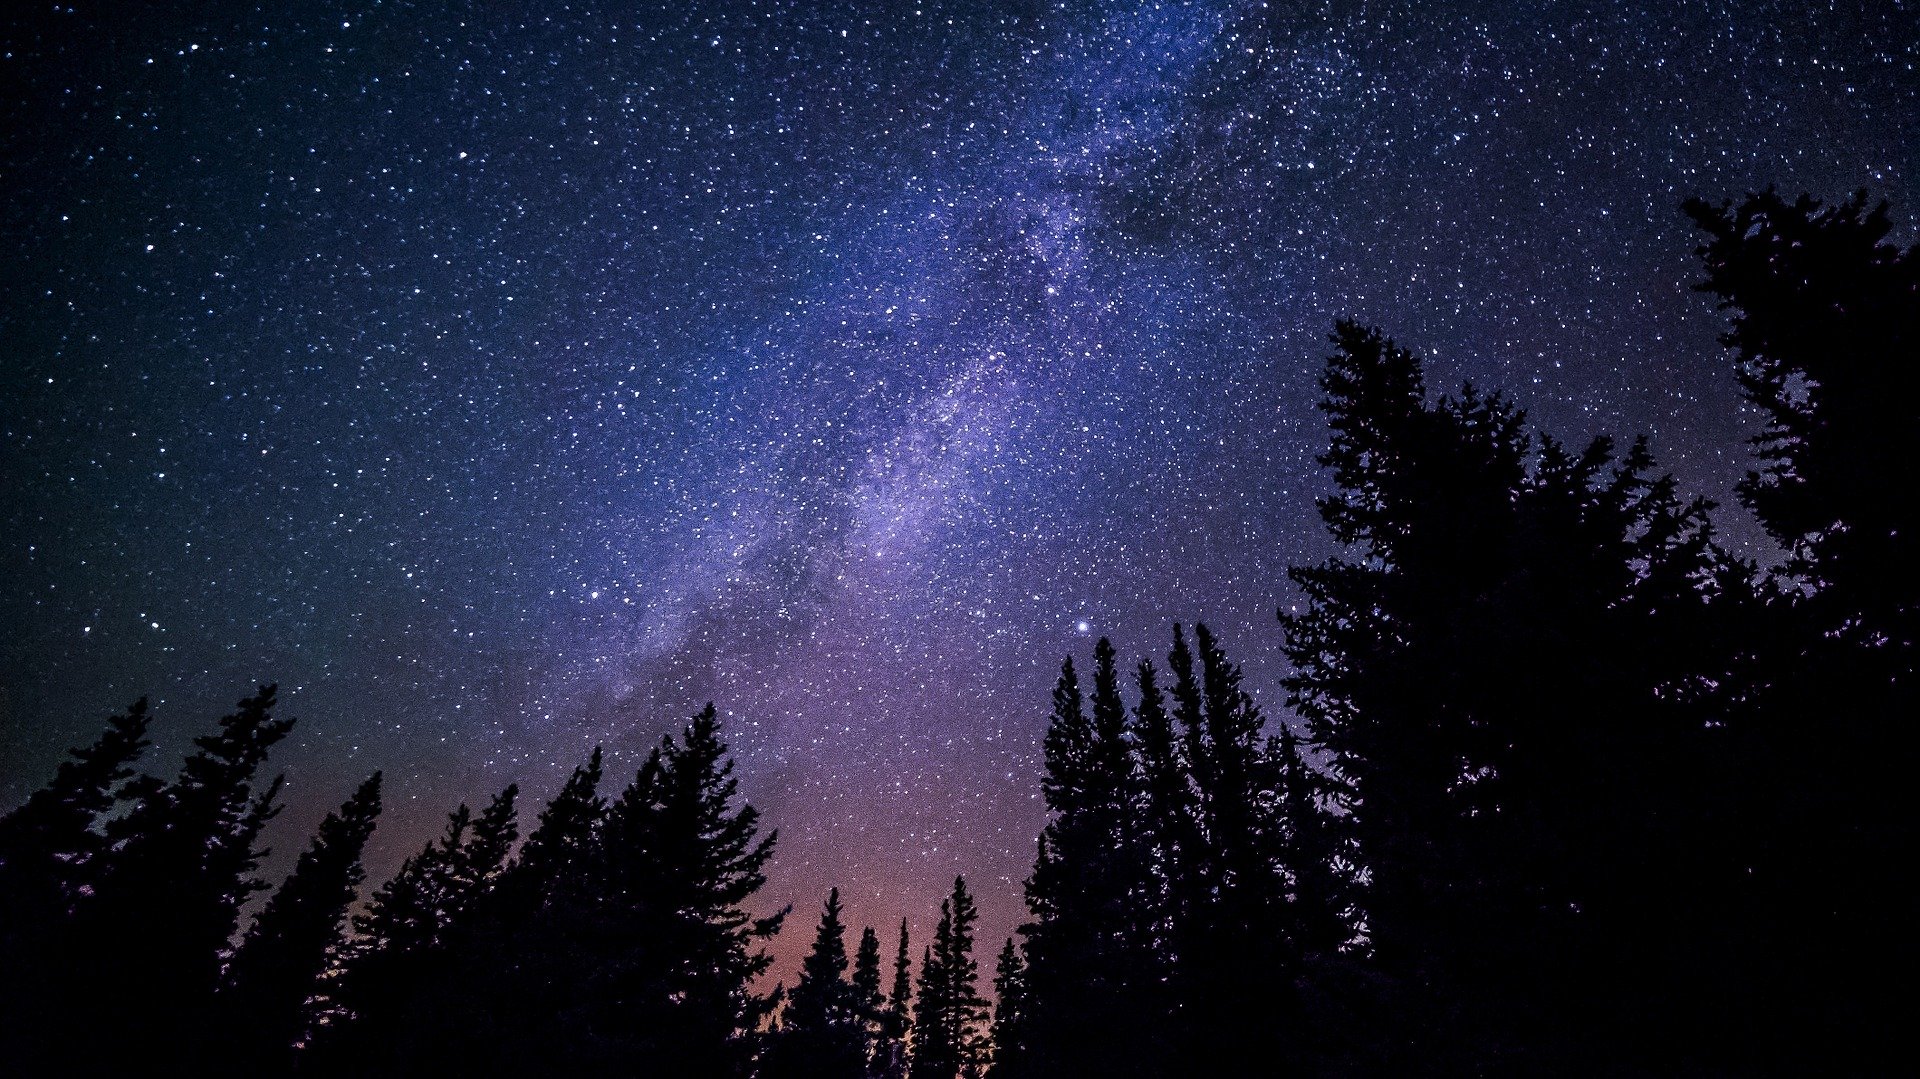 Milky Way in a dark forest sky.